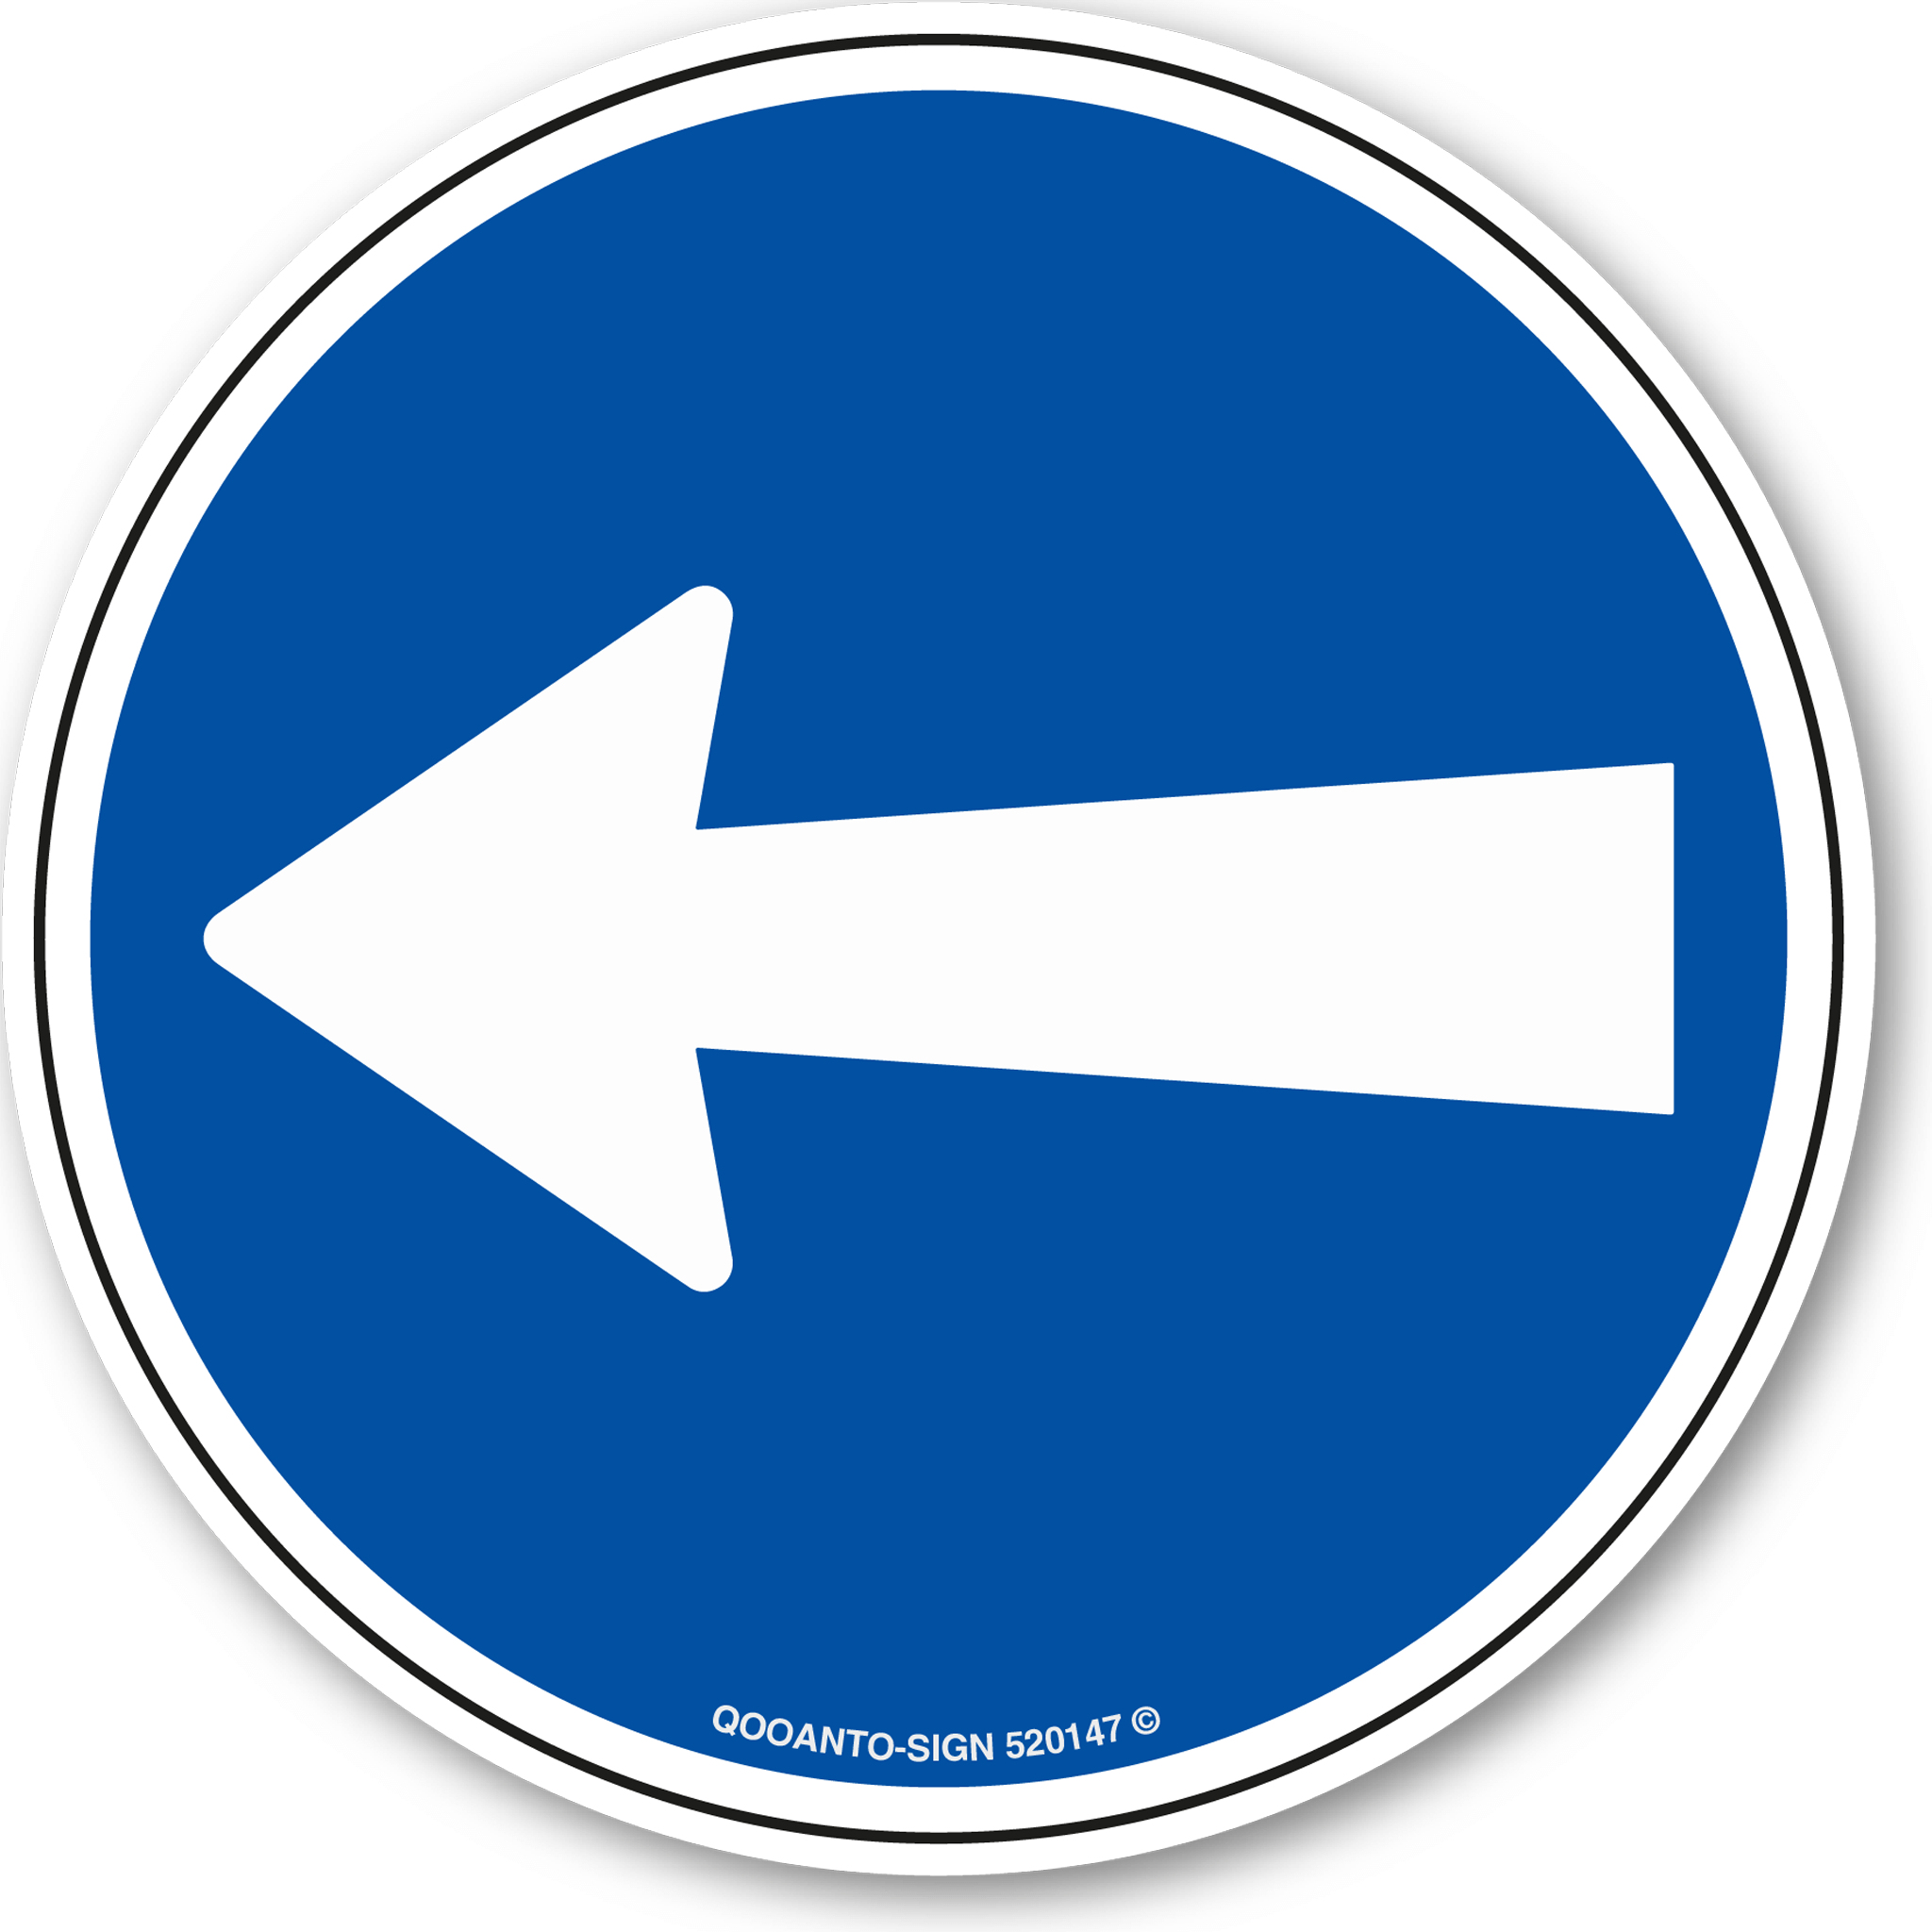 Fahrrichtung links, Schild oder Aufkleber